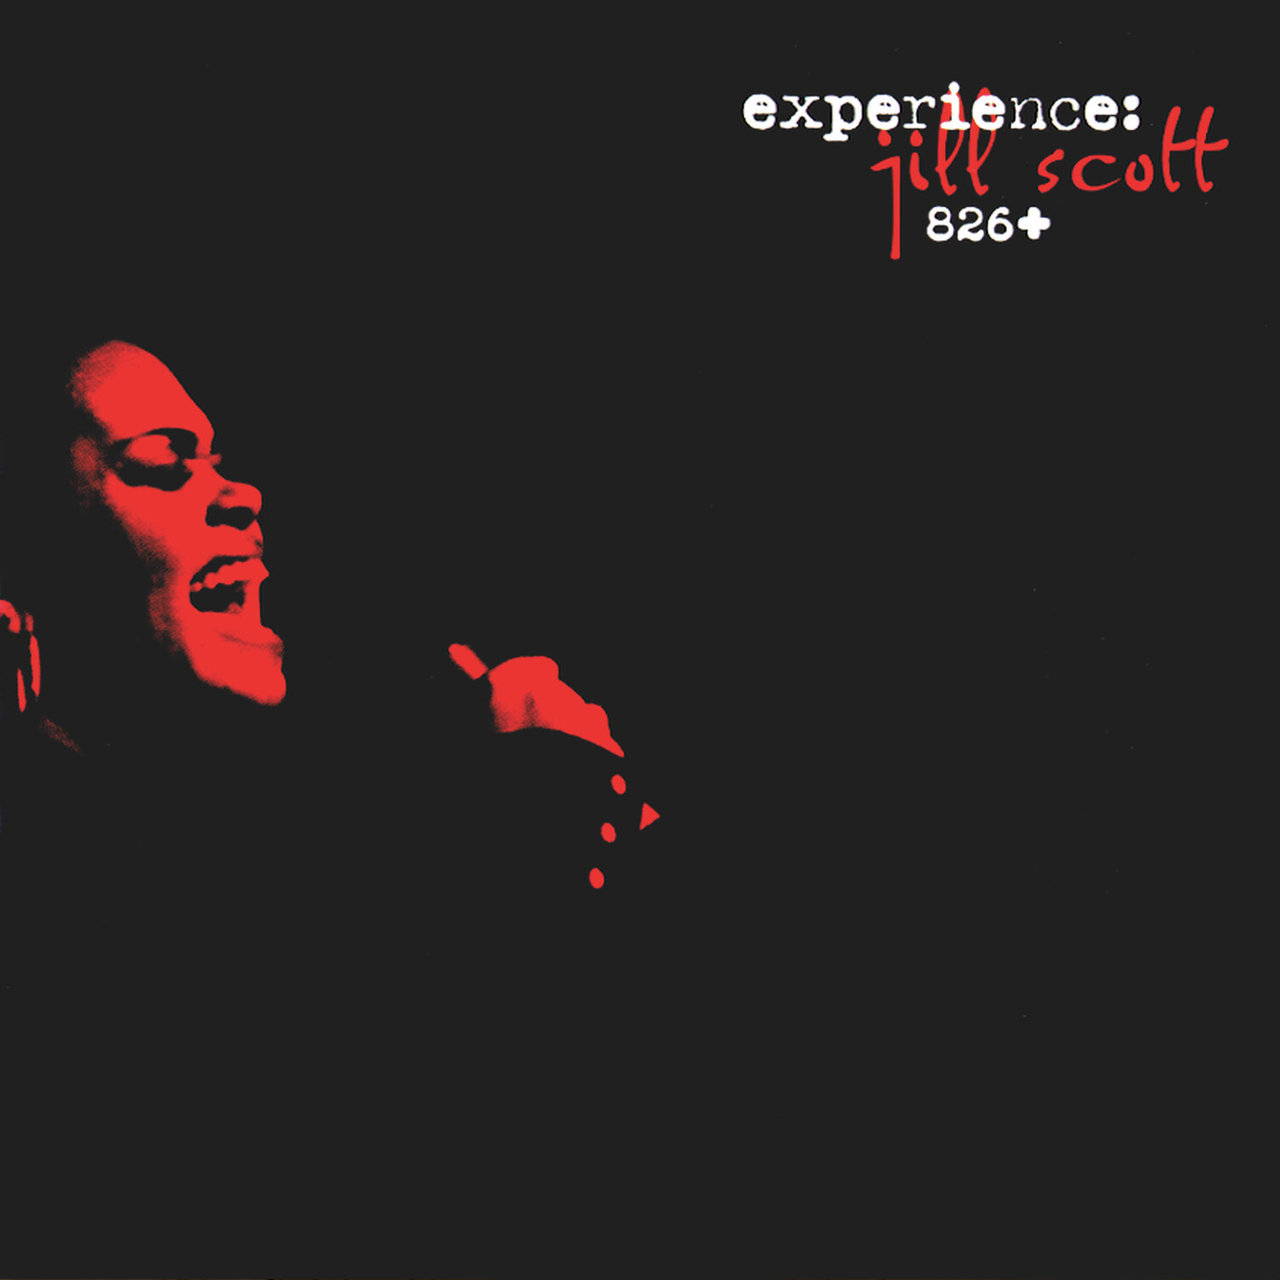 Jill Scott - Experience: Jill Scott 826+ (Cover)